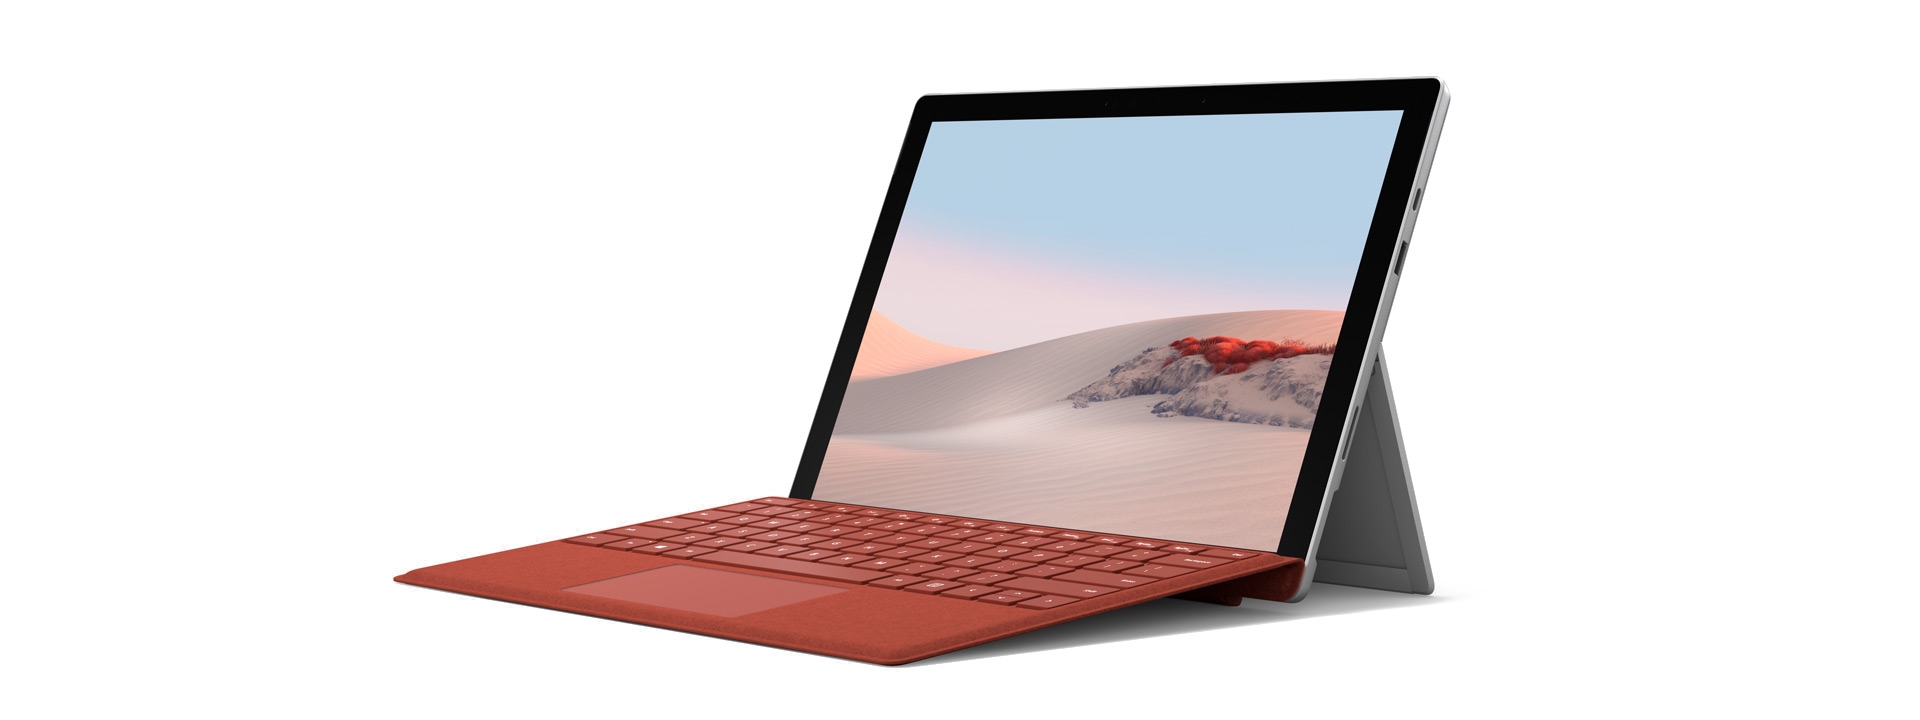 Surface Pro 7 與 Surface 實體鍵盤保護蓋角度